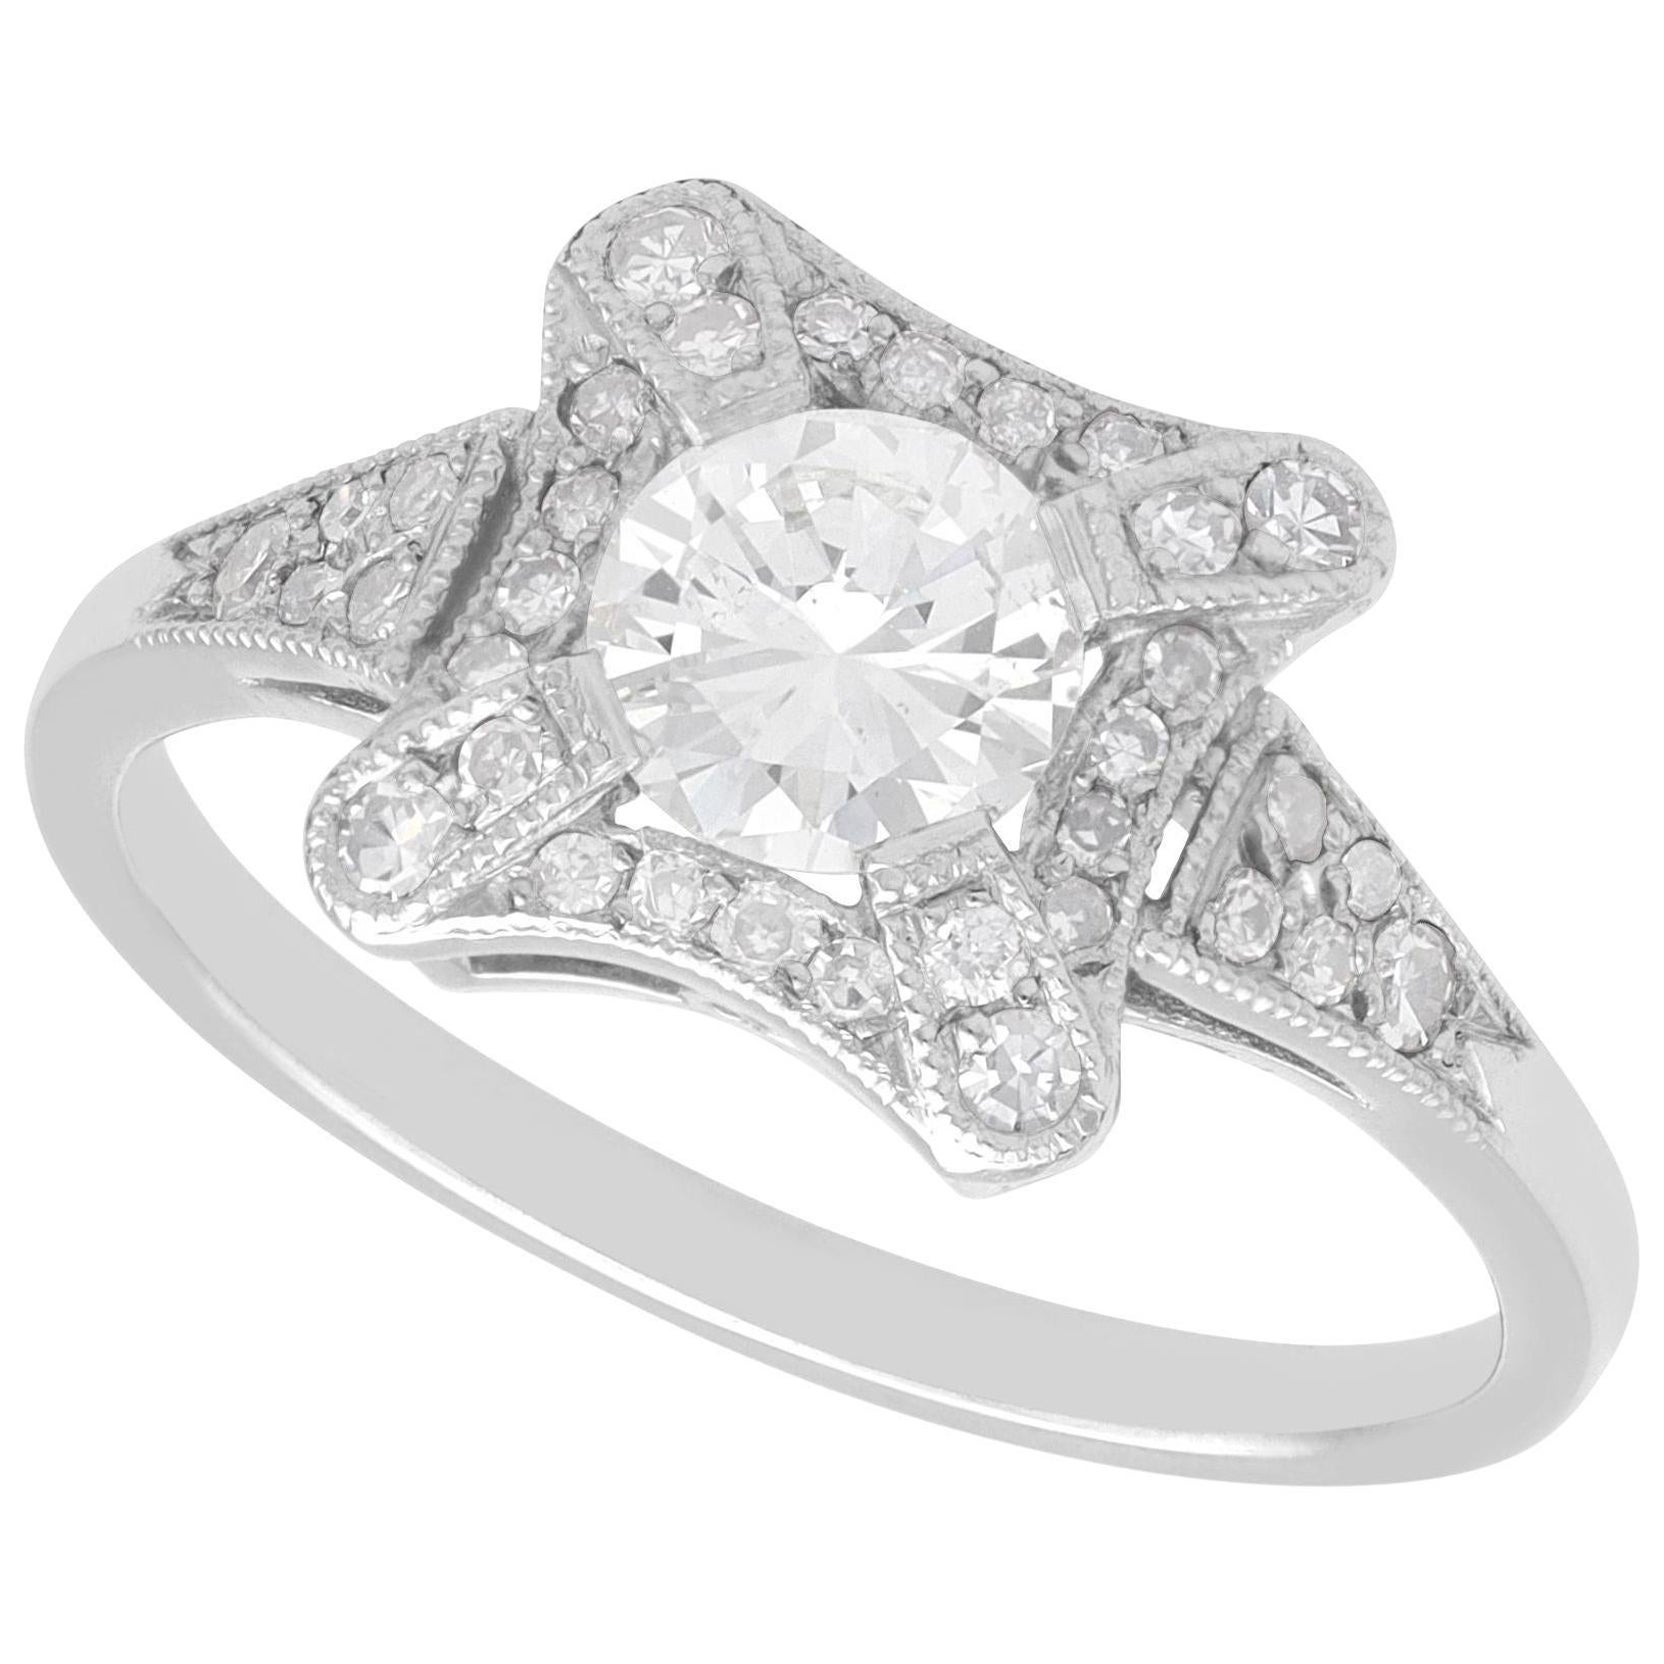 1.01 Carat Diamond and Platinum Cluster Engagement Ring